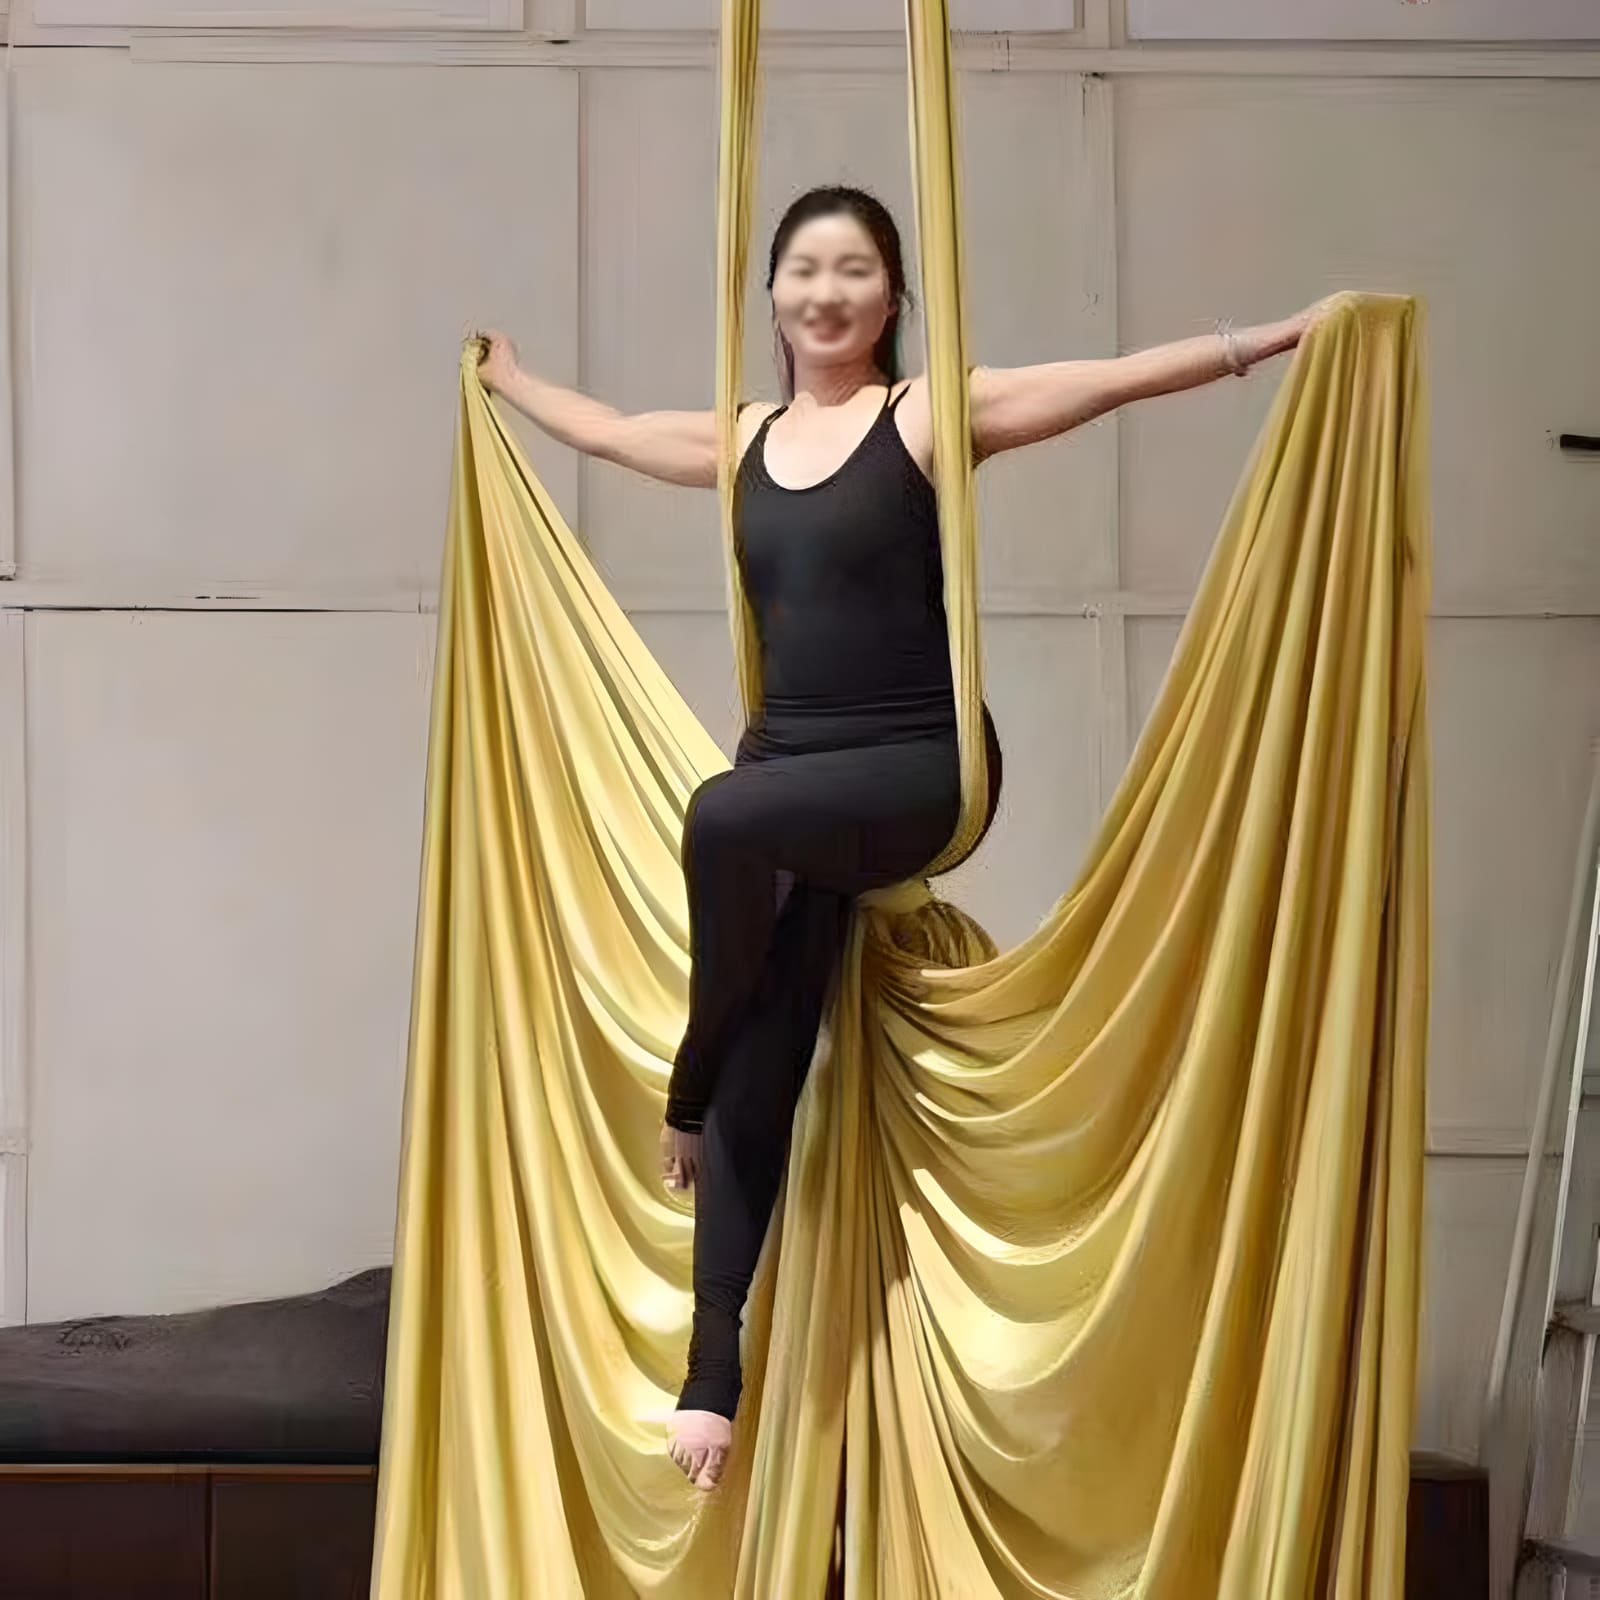    aerial-yoga-hammock-in-golden-color